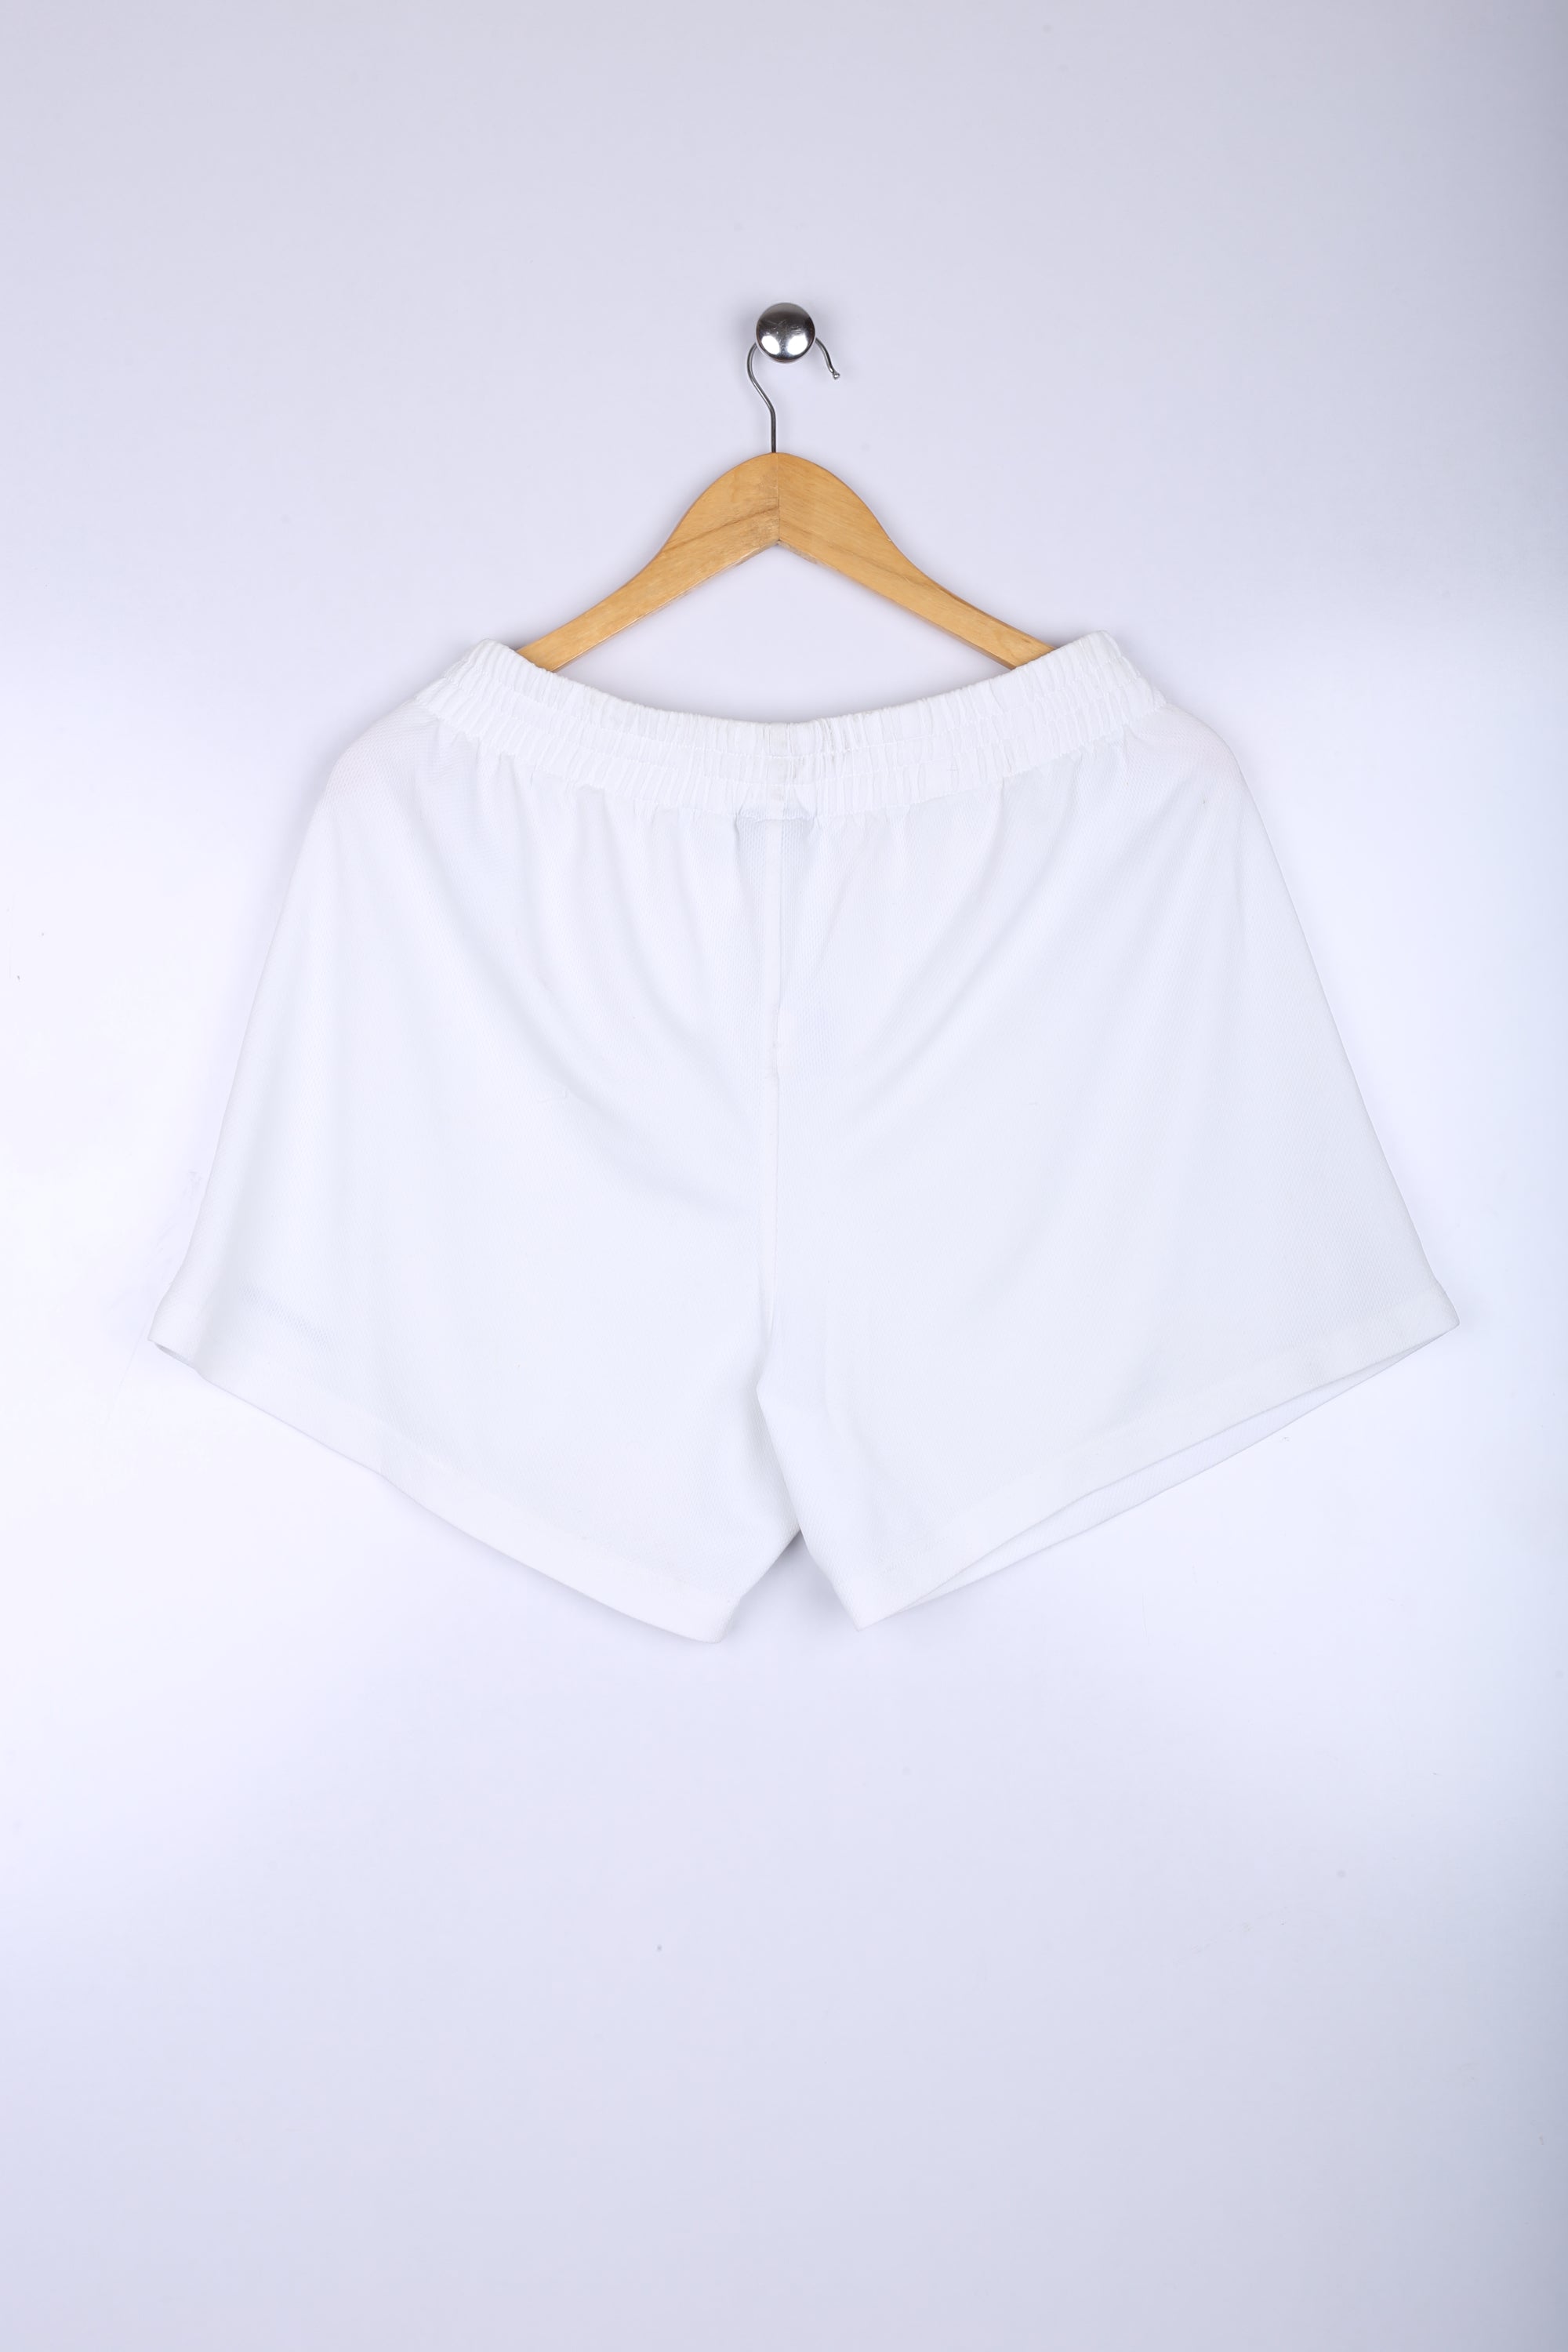 Vintage Reebok Shorts White